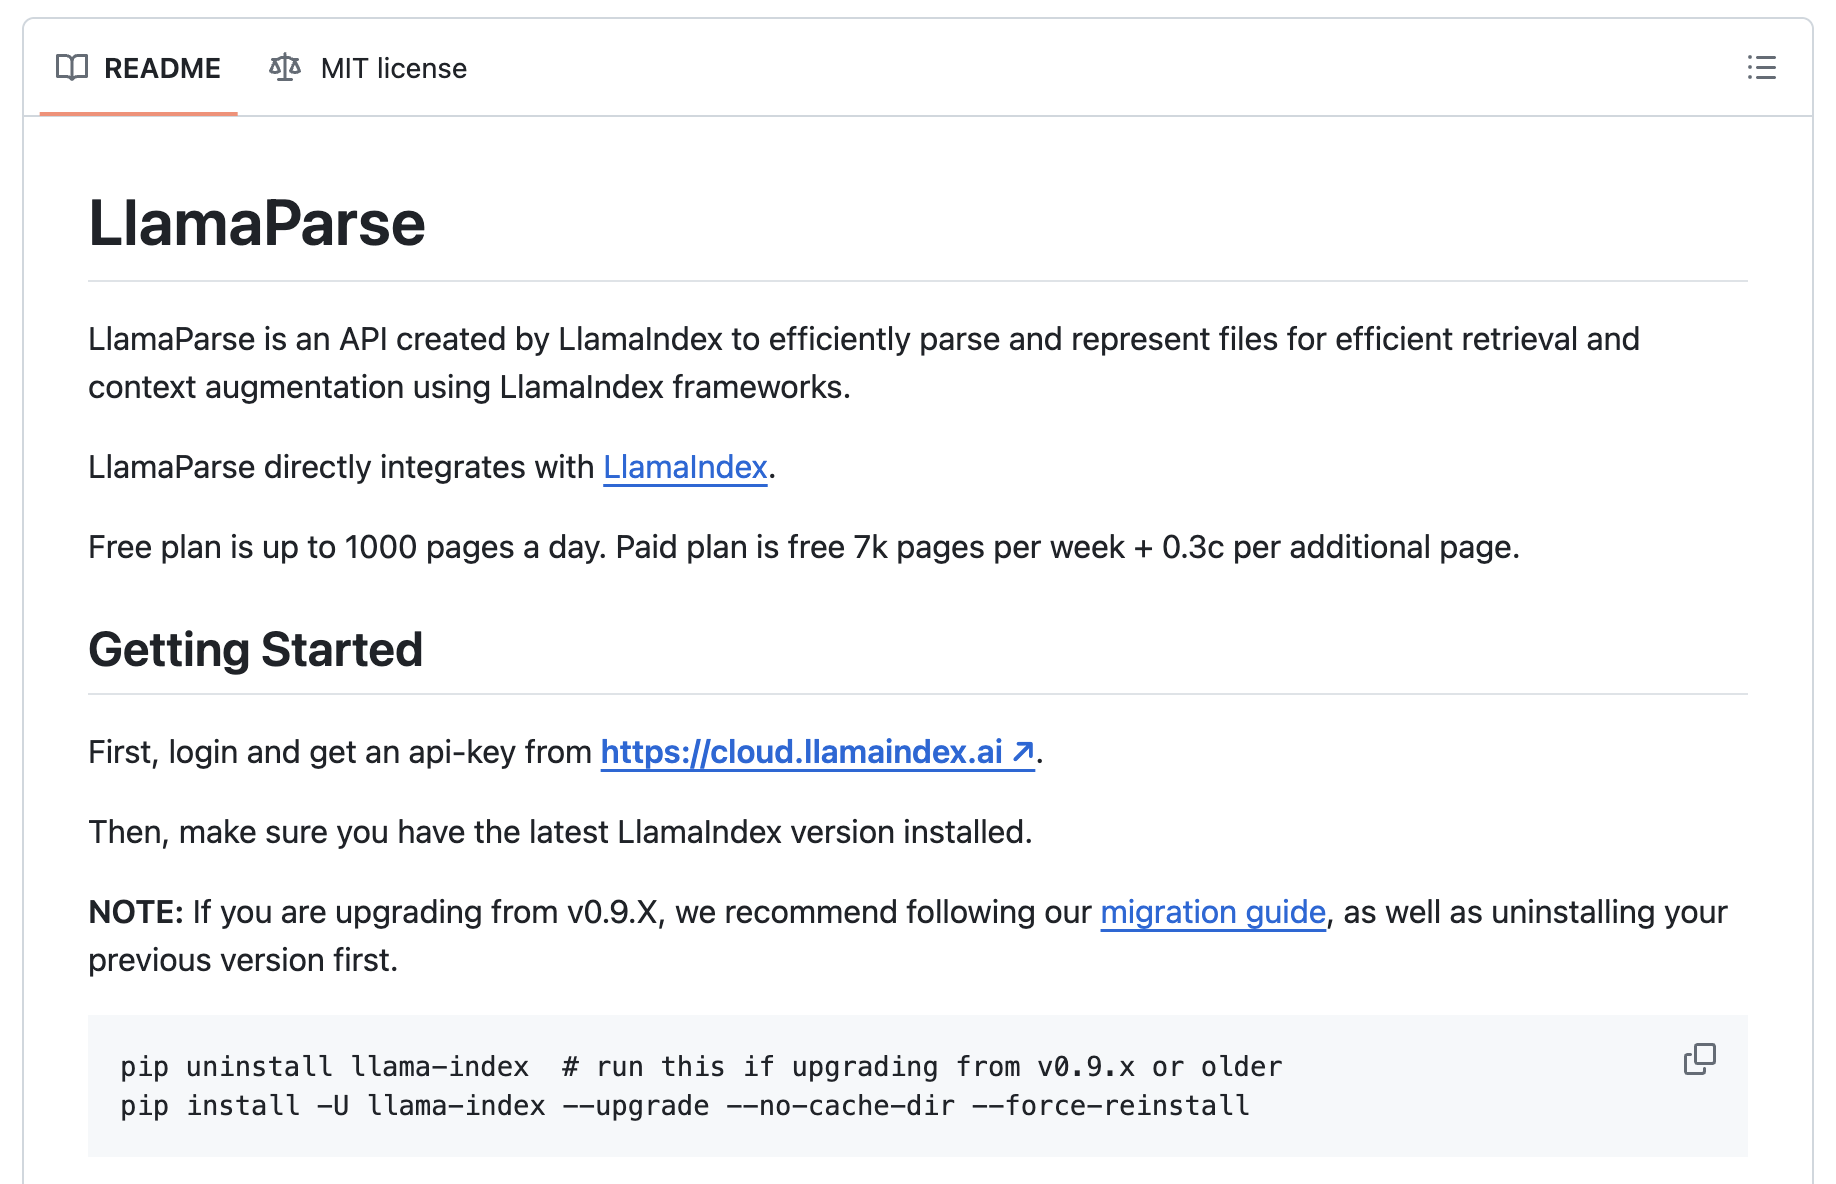  LlamaParse: An API by LlamaIndex to Efficiently Parse and Represent Files for Efficient Retrieval and Context Augmentation Using LlamaIndex Frameworks